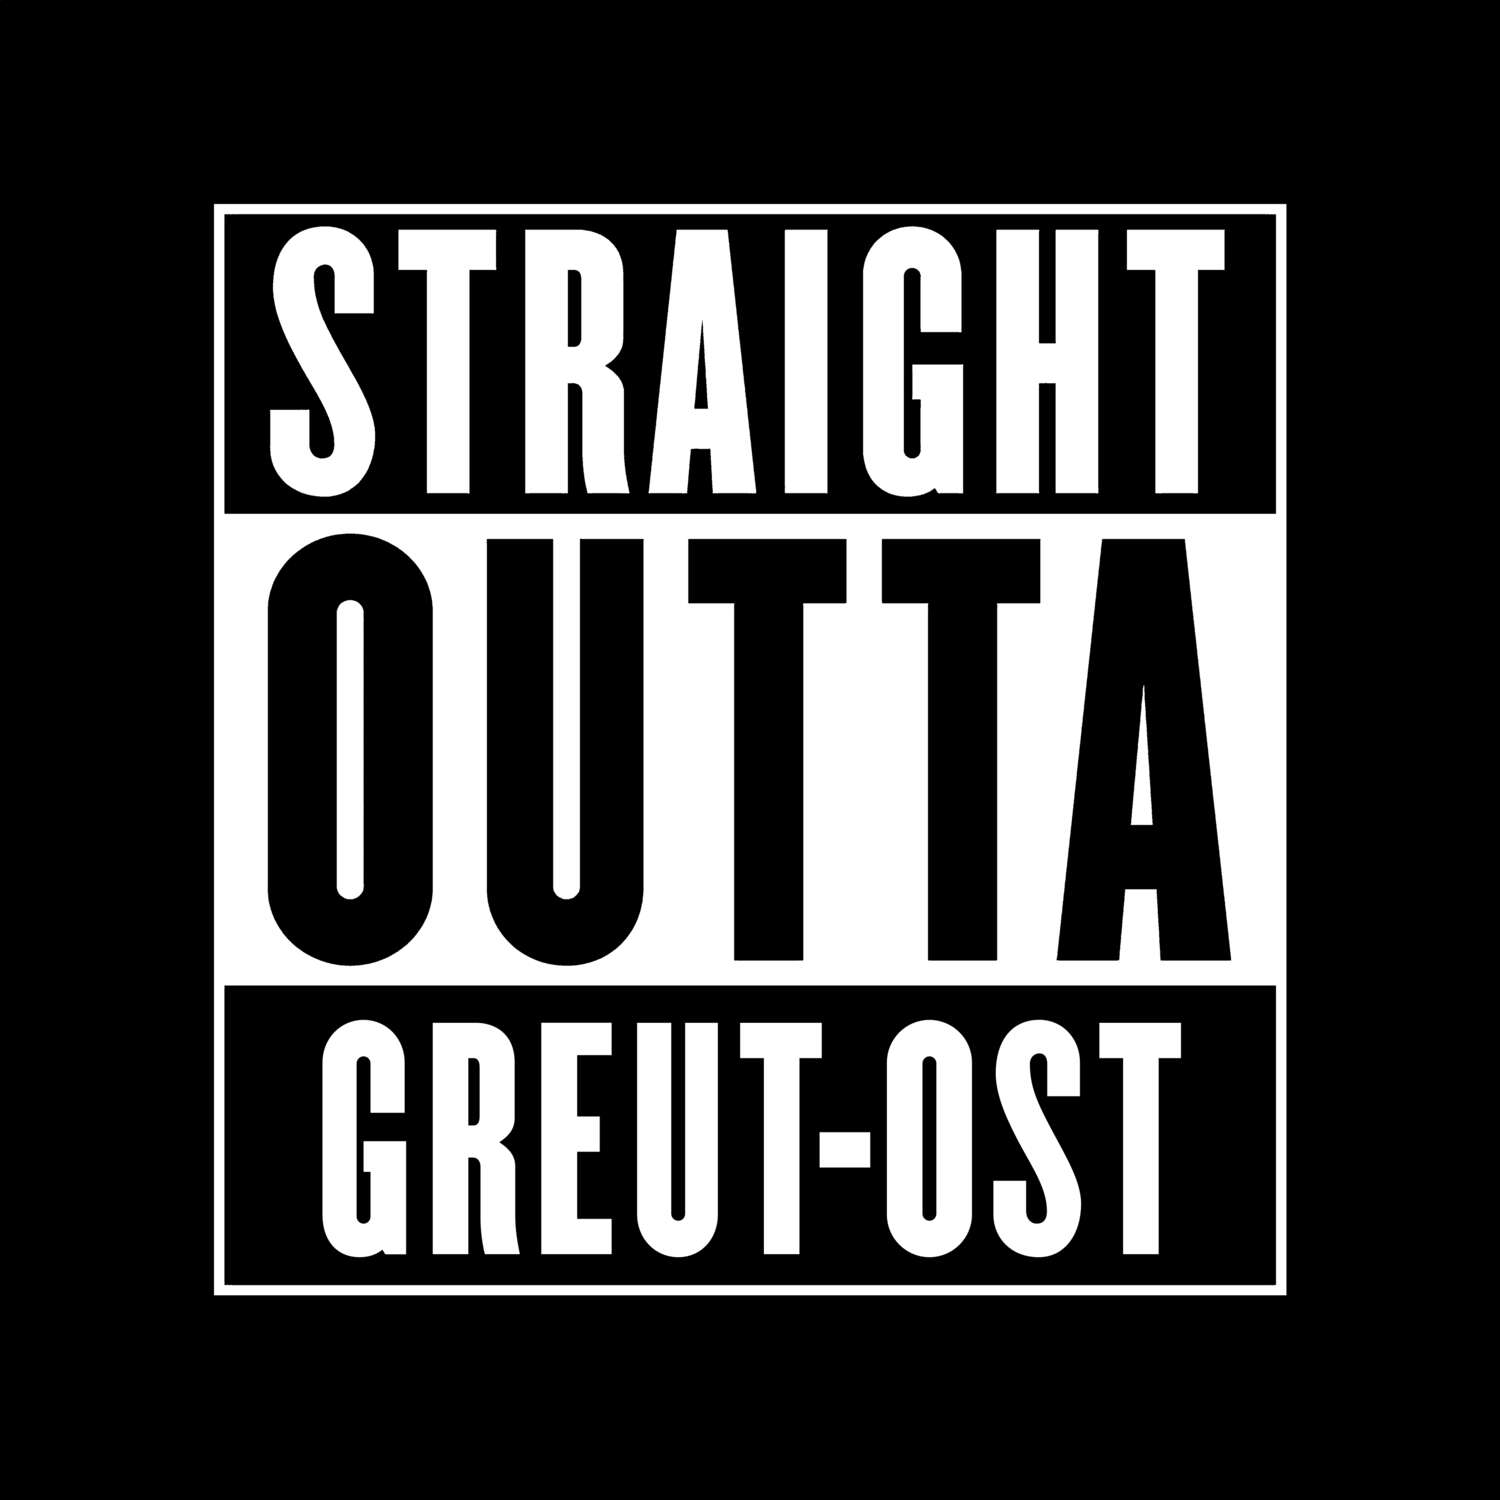 Greut-Ost T-Shirt »Straight Outta«